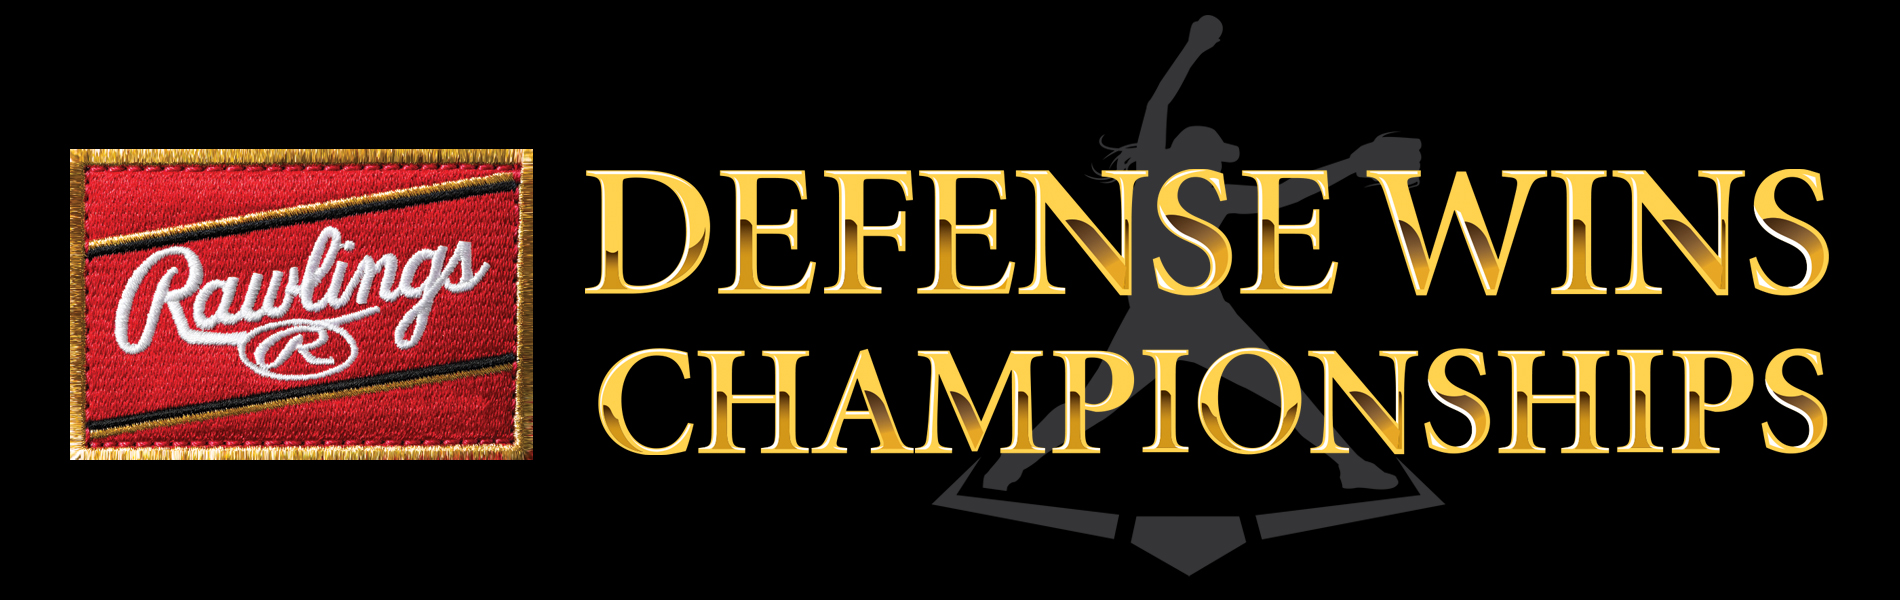 Rawlings - Defense Wins Championships